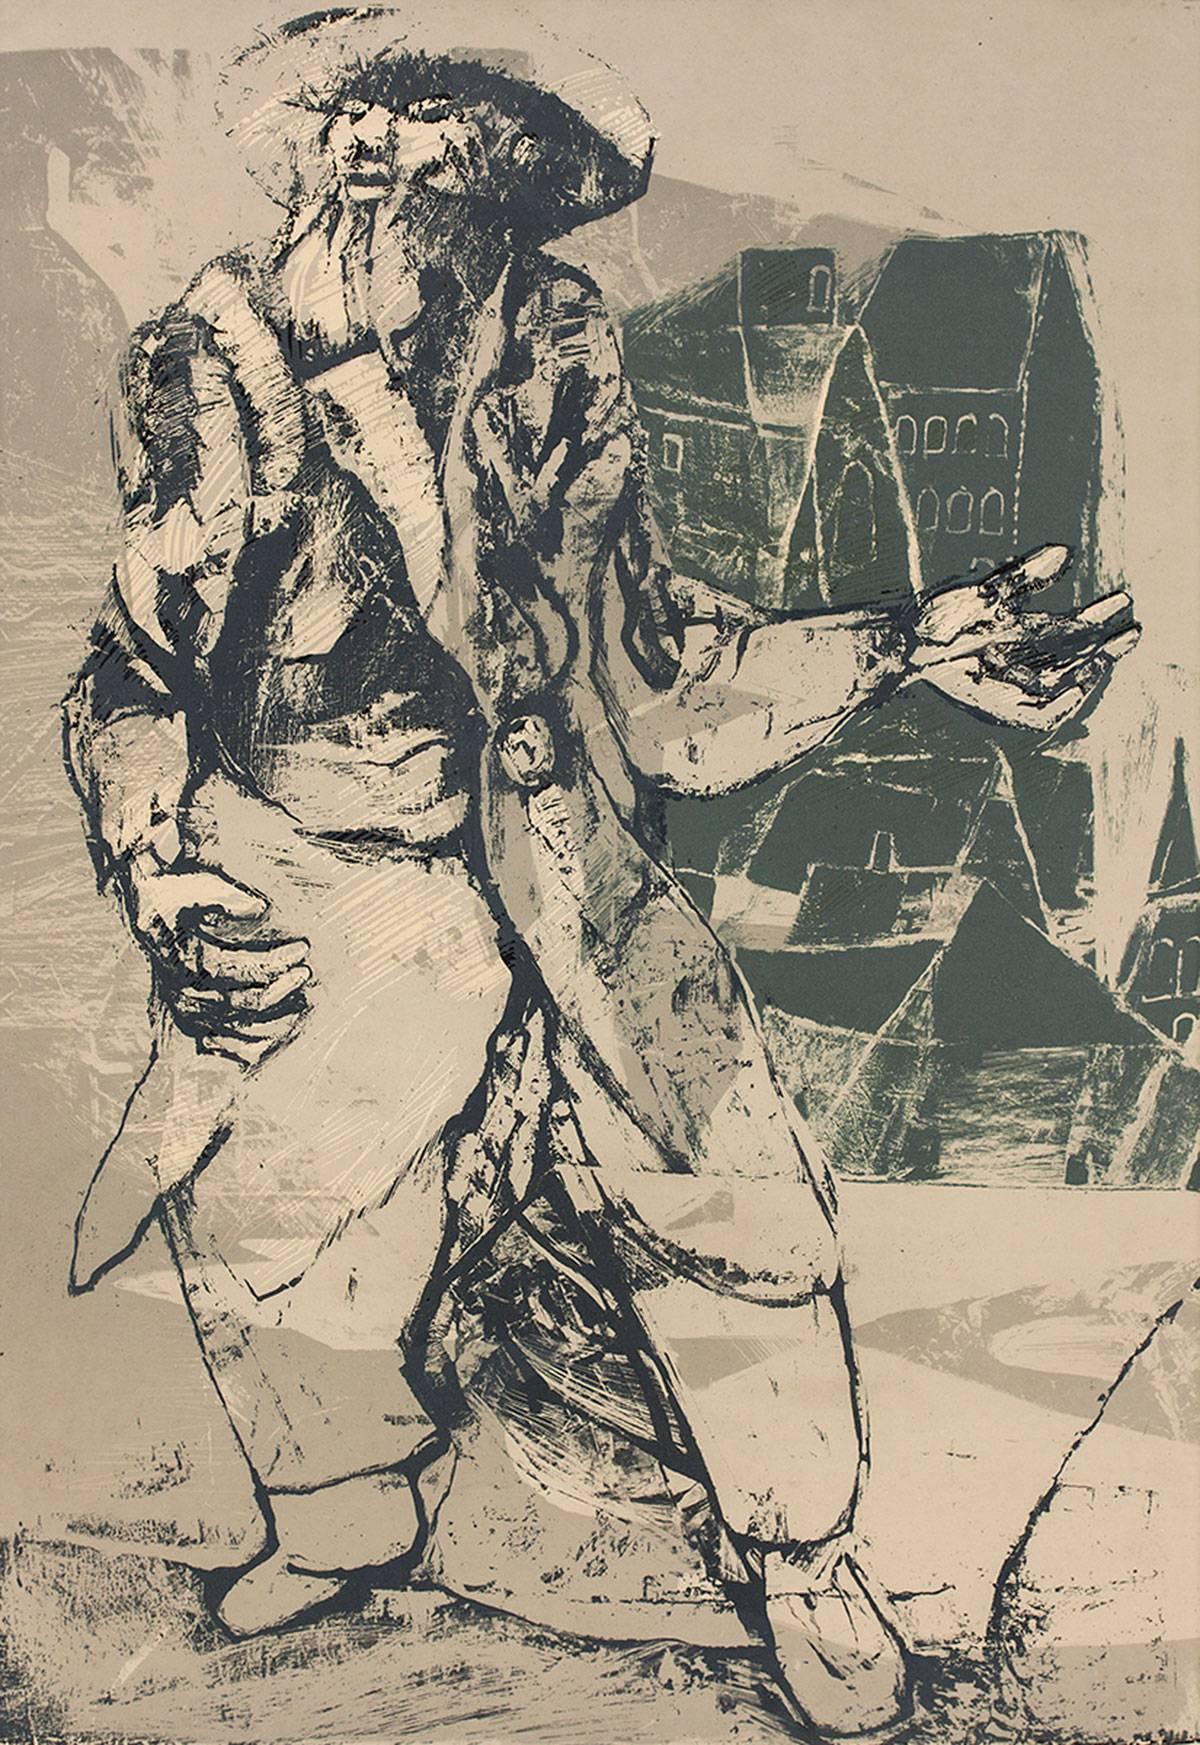 Man from the Shtetl (Sholem Aleichem) - Print by Gershon Knispel